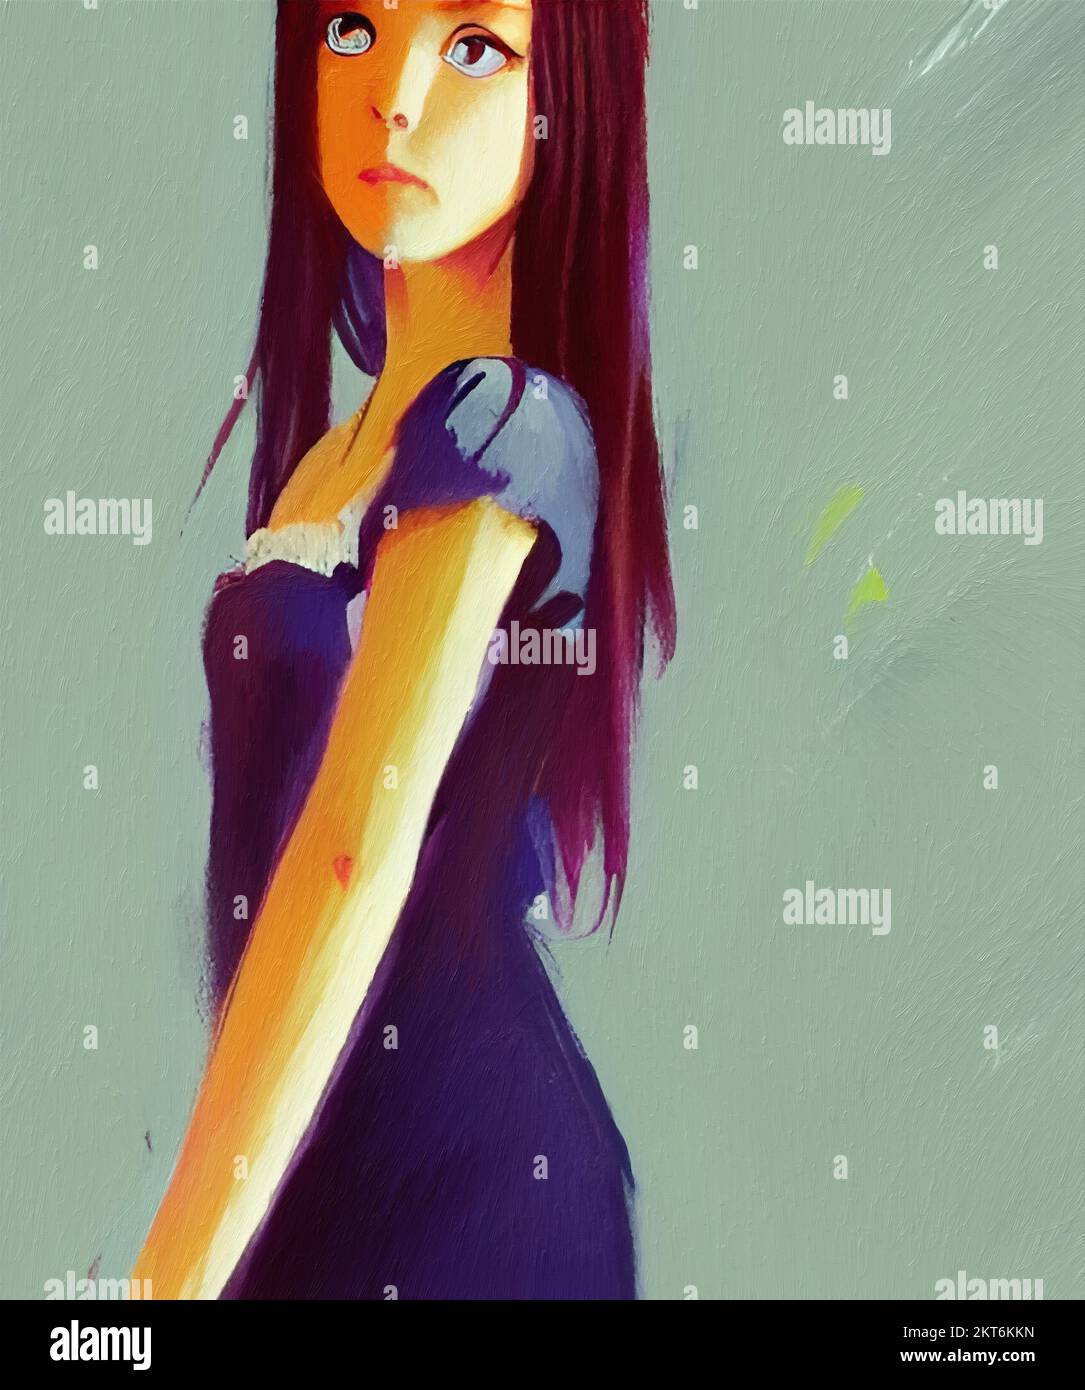 Illustration of beautiful stylish cartoon anime girl portrait Stock Photo -  Alamy